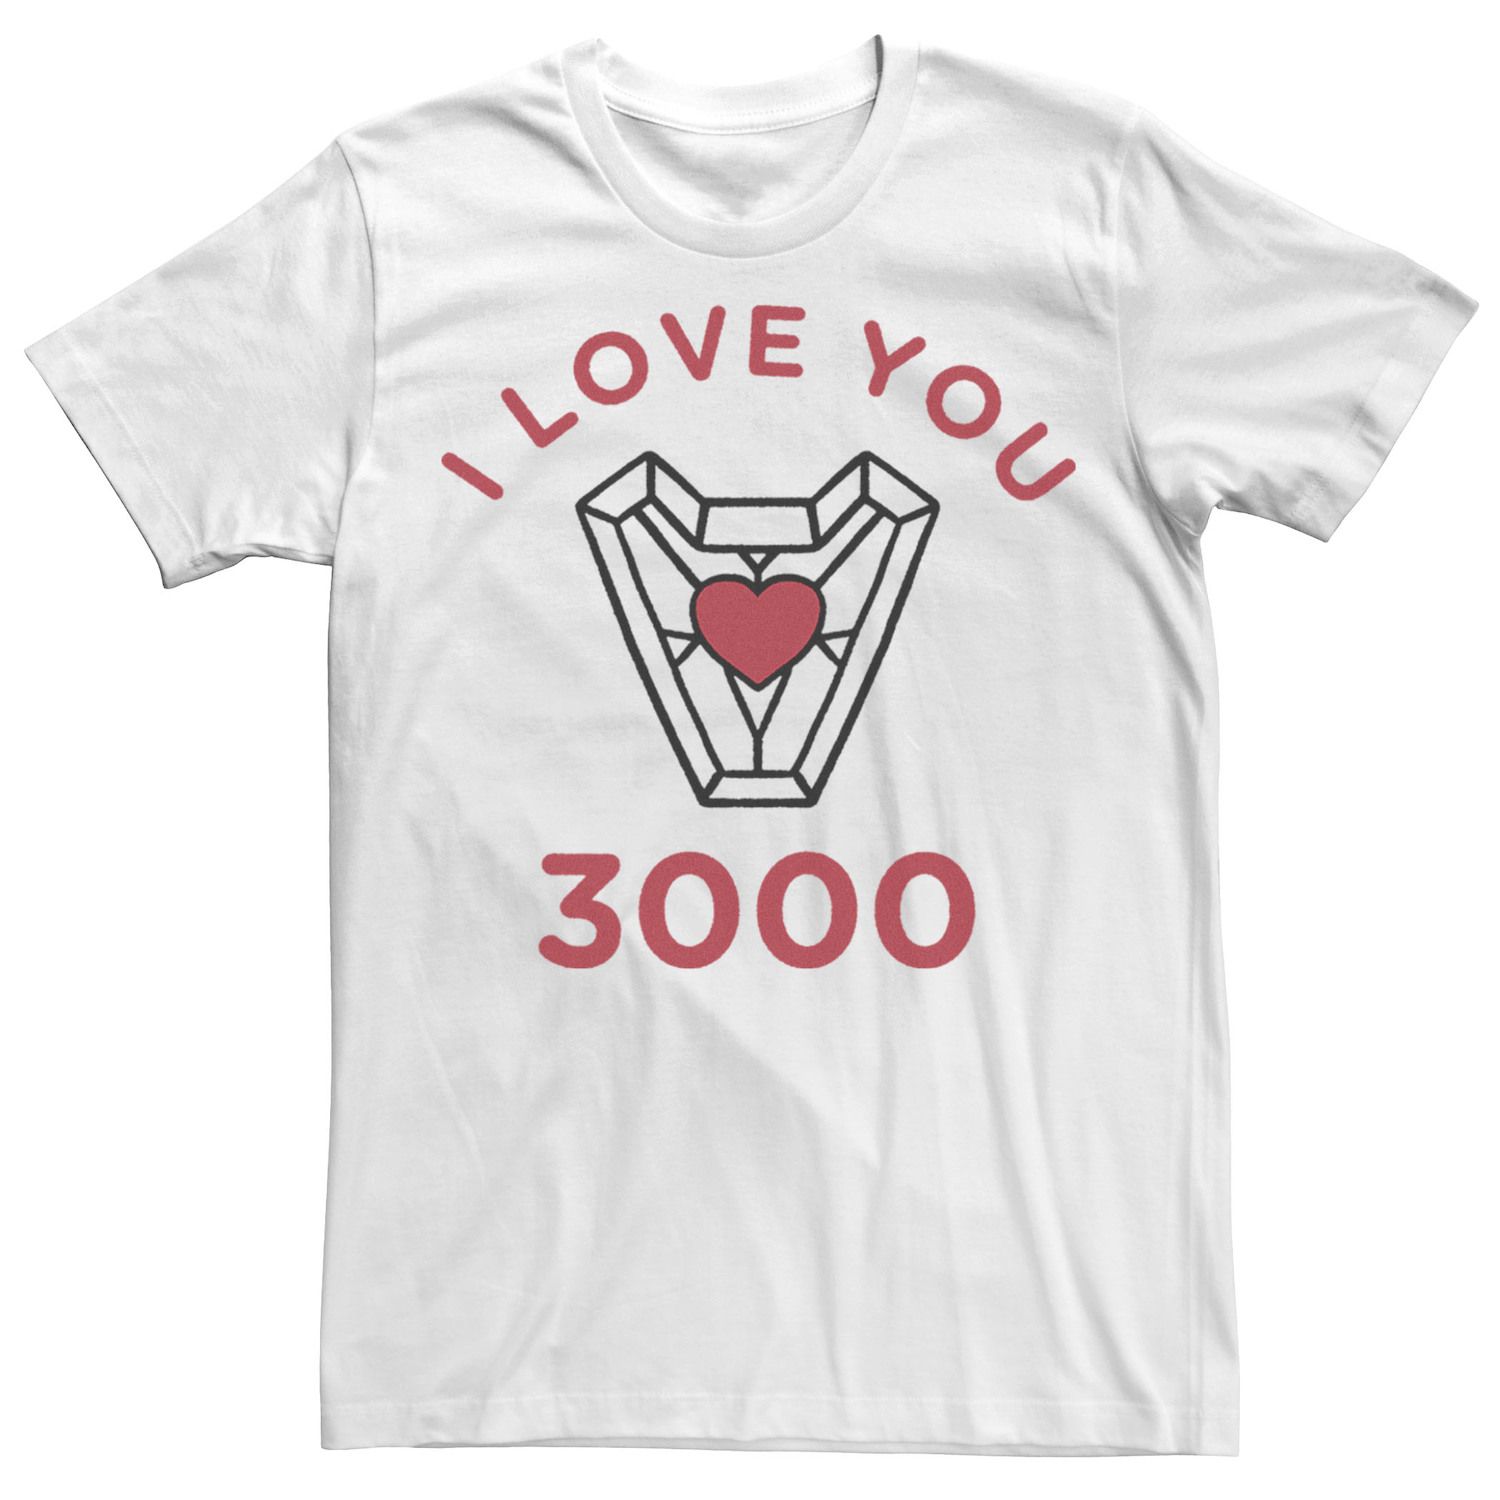 Мужская футболка Marvel Iron Man I Love You 3000 Arc Reactor Licensed Character мужская футболка marvel iron man arc reactor heart с портретом licensed character